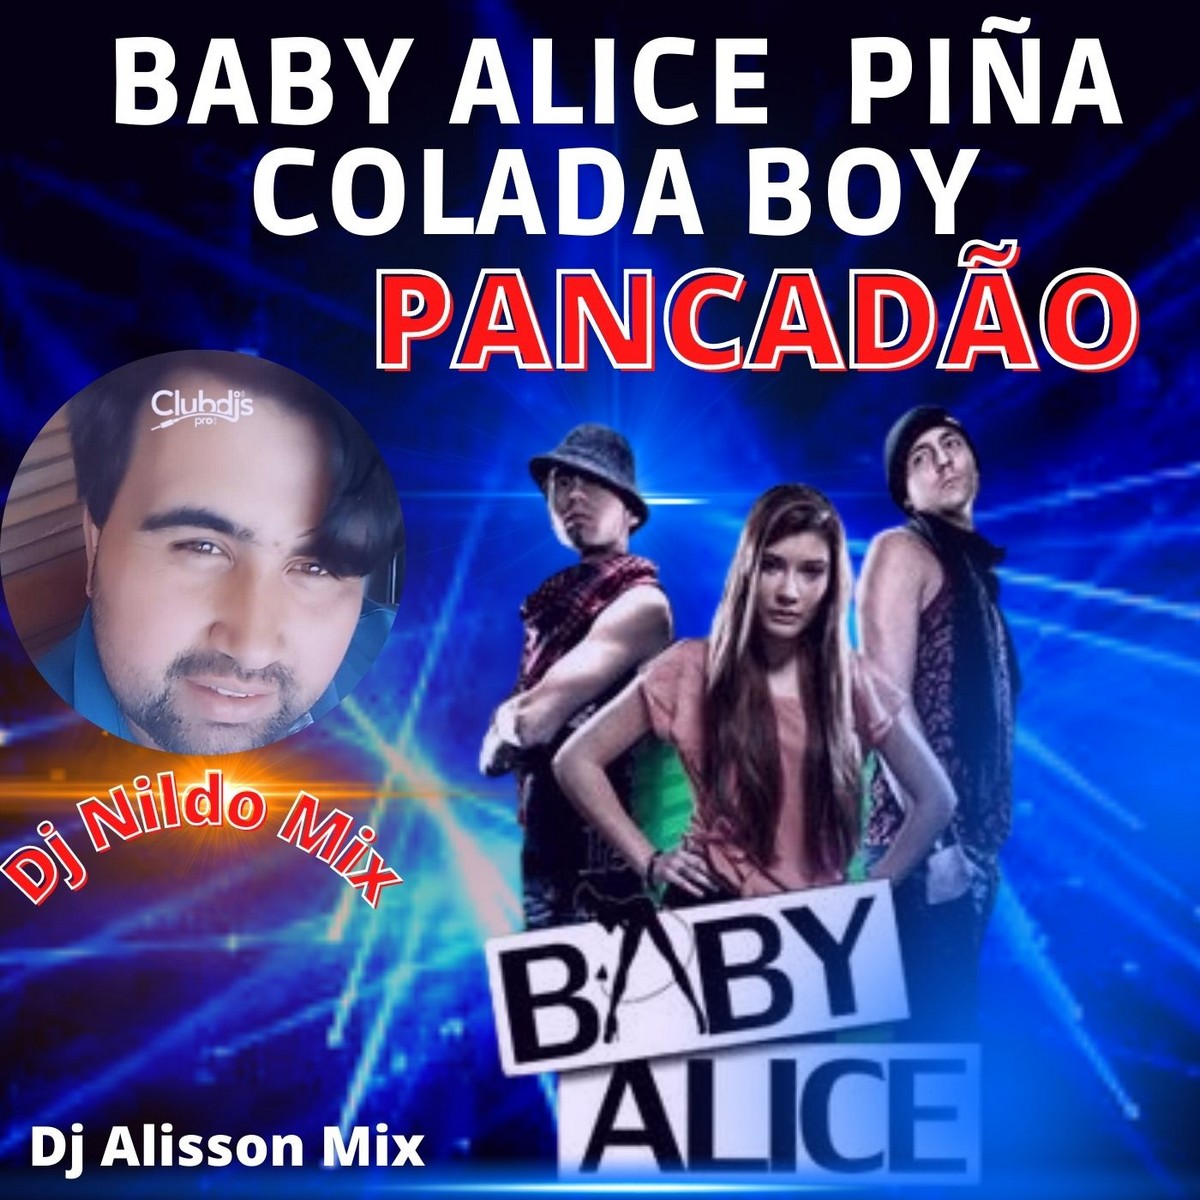 Baby Alice - Piña Colada Boy Remix Pancadão Dj Nildo Mix